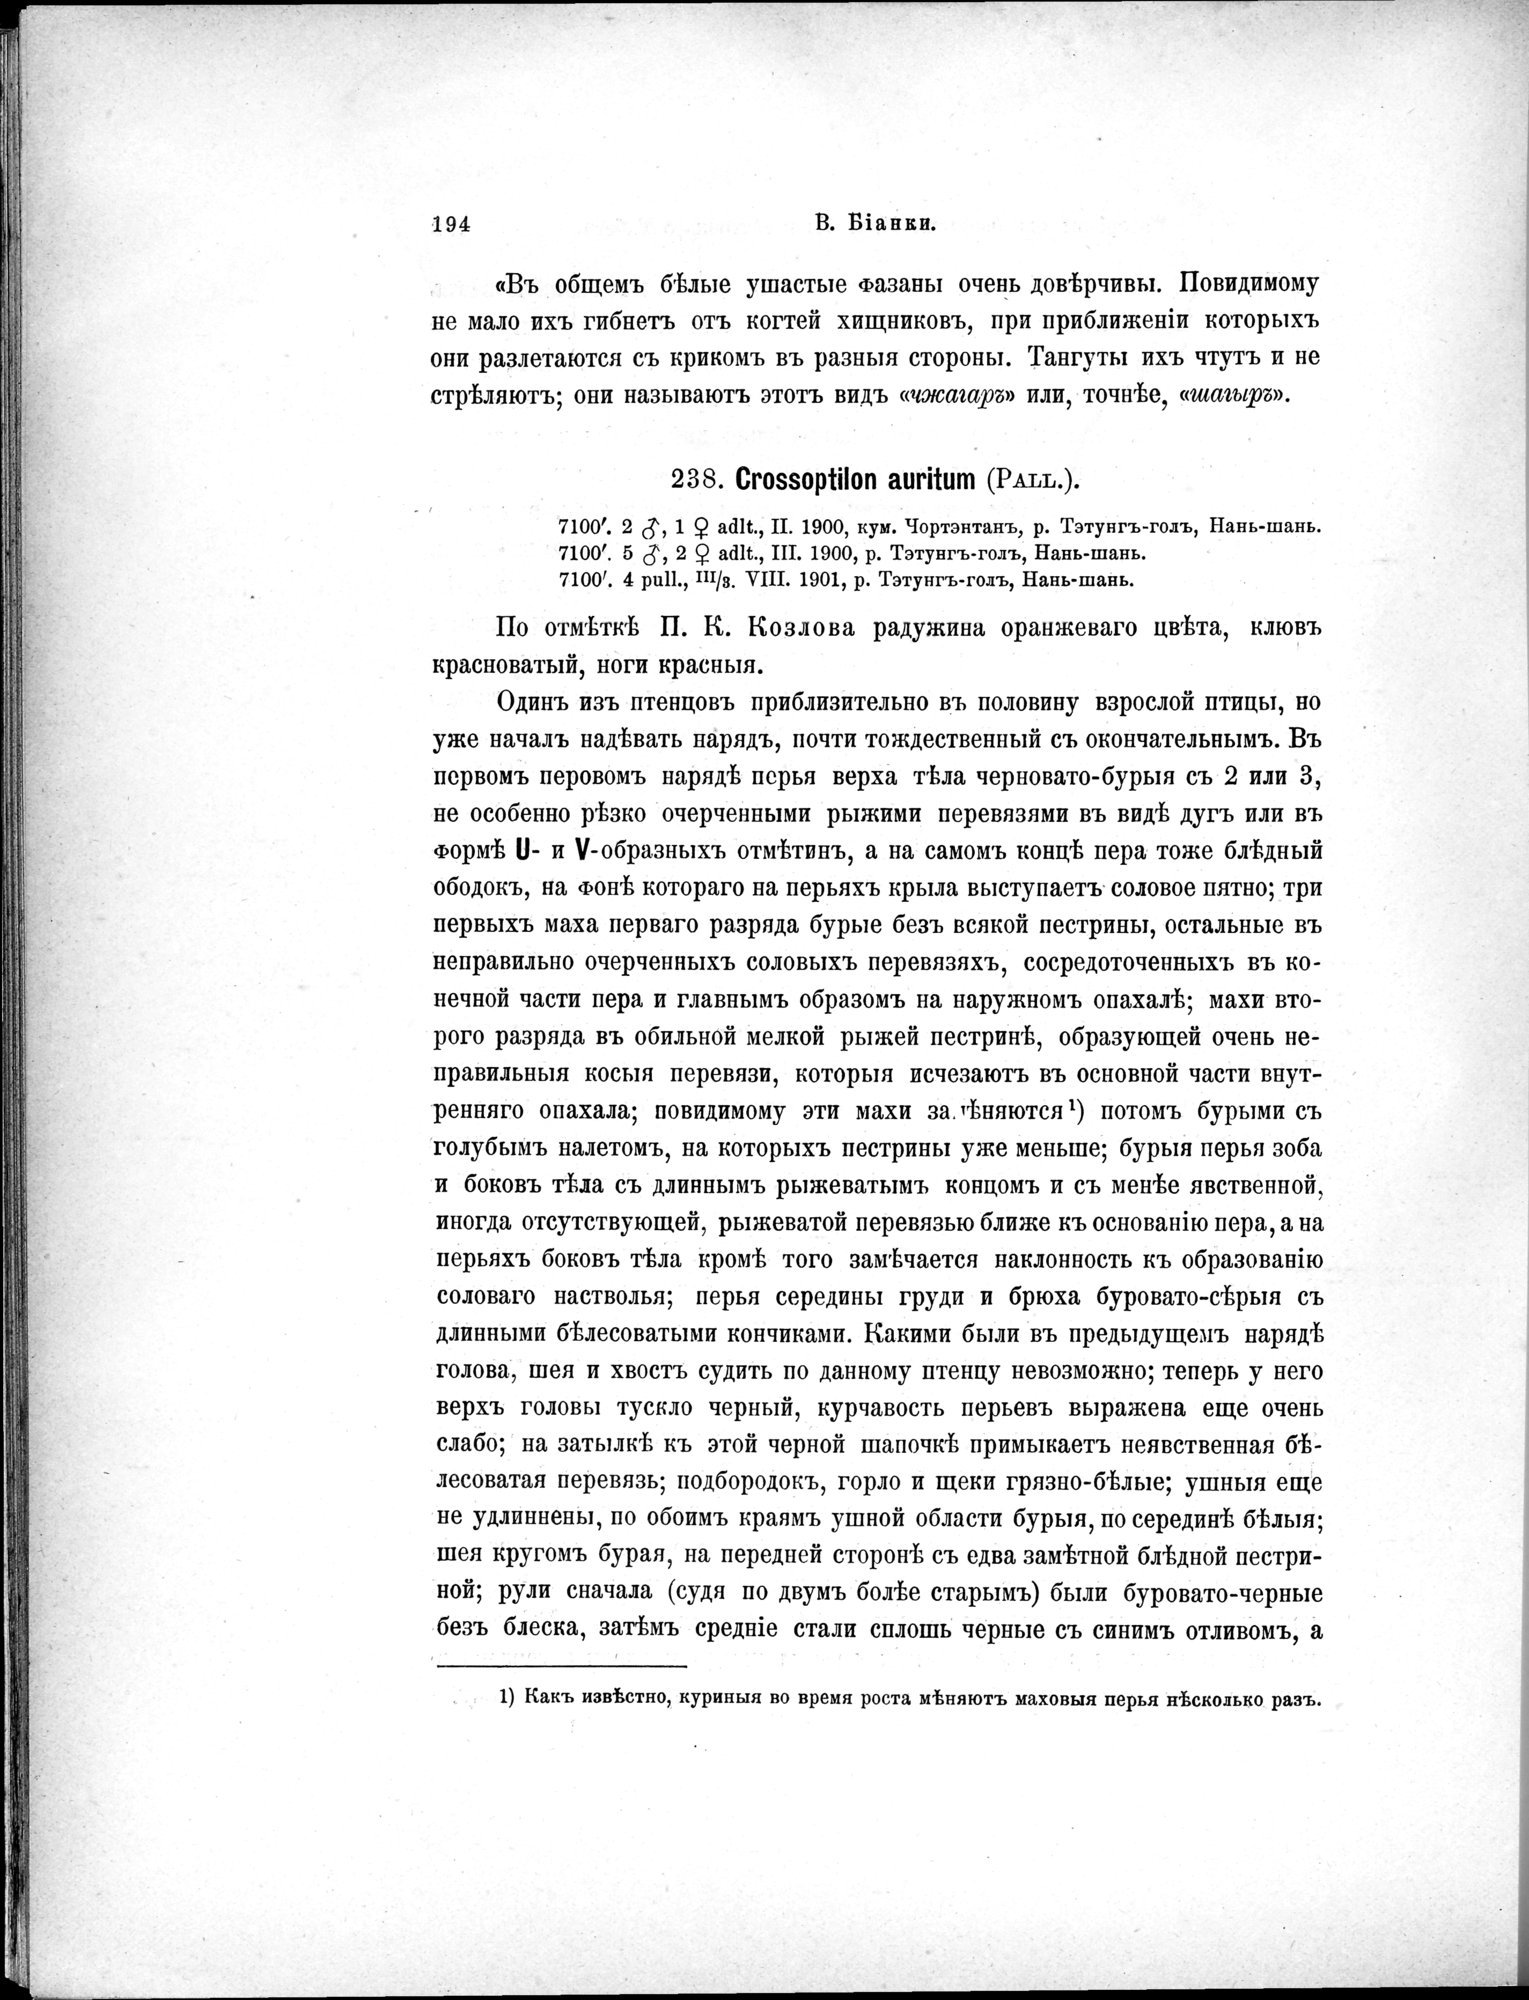 Mongoliia i Kam : vol.5 / Page 266 (Grayscale High Resolution Image)